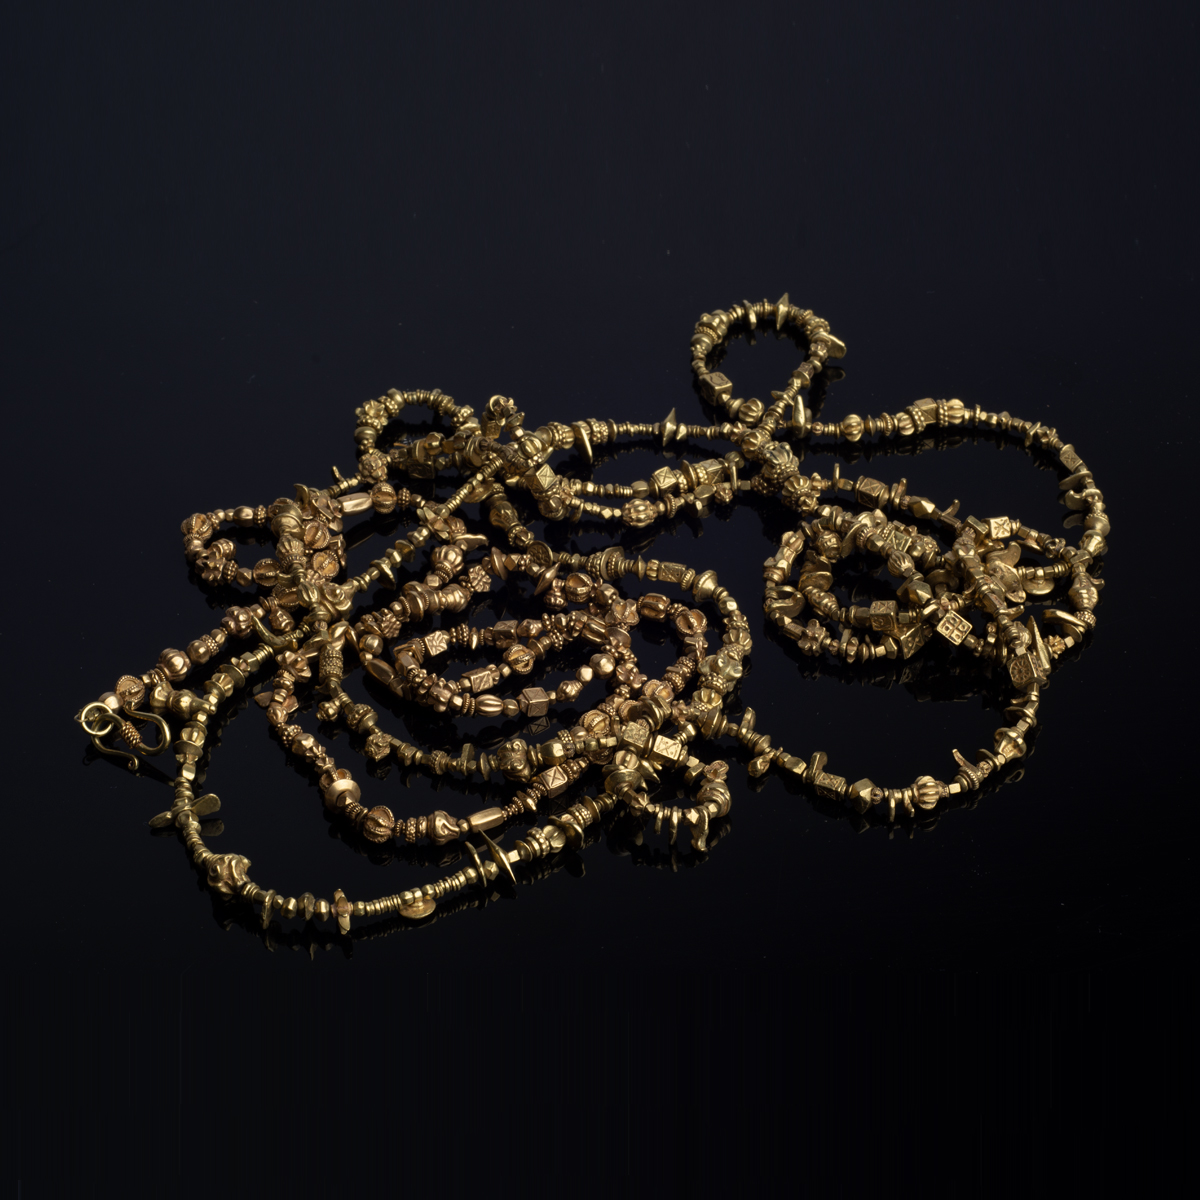 Pyu jewels - gold beads jewelry